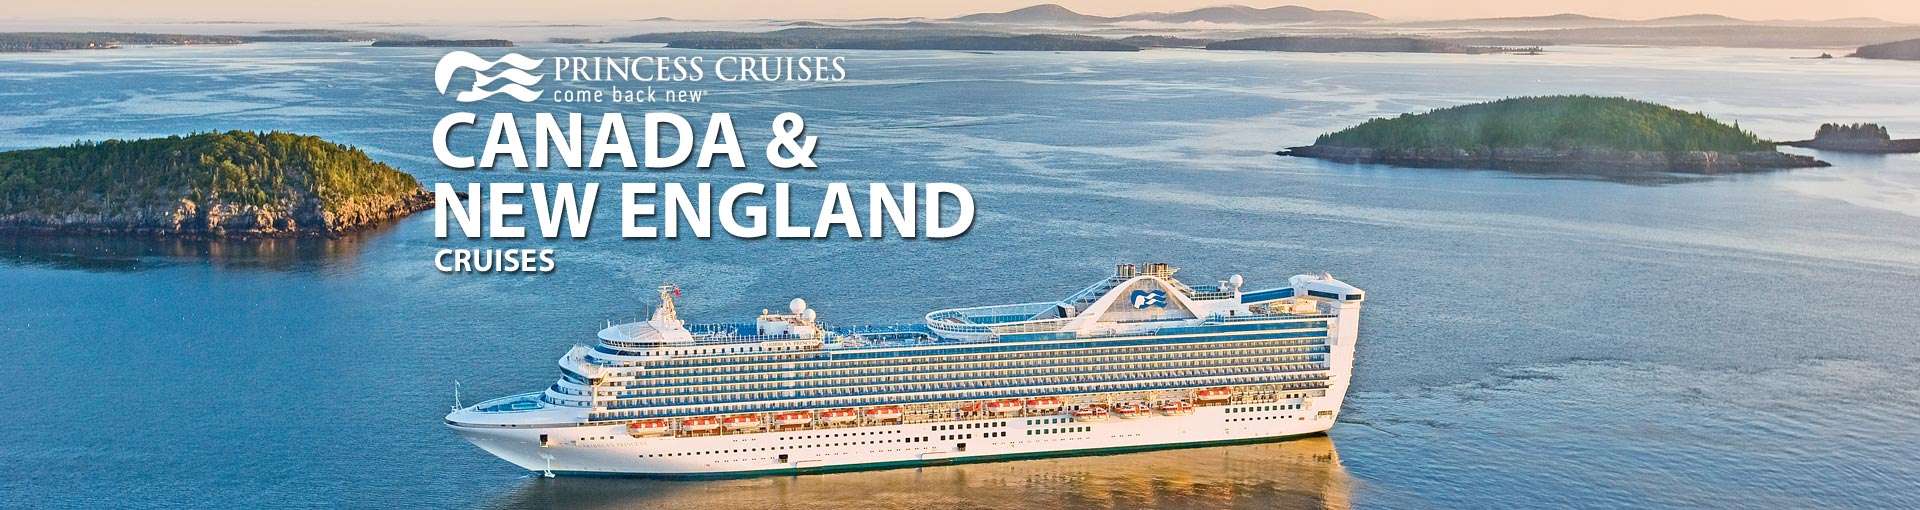 Princess Canada Cruises, 2019, 2020 and 2021 New England ...